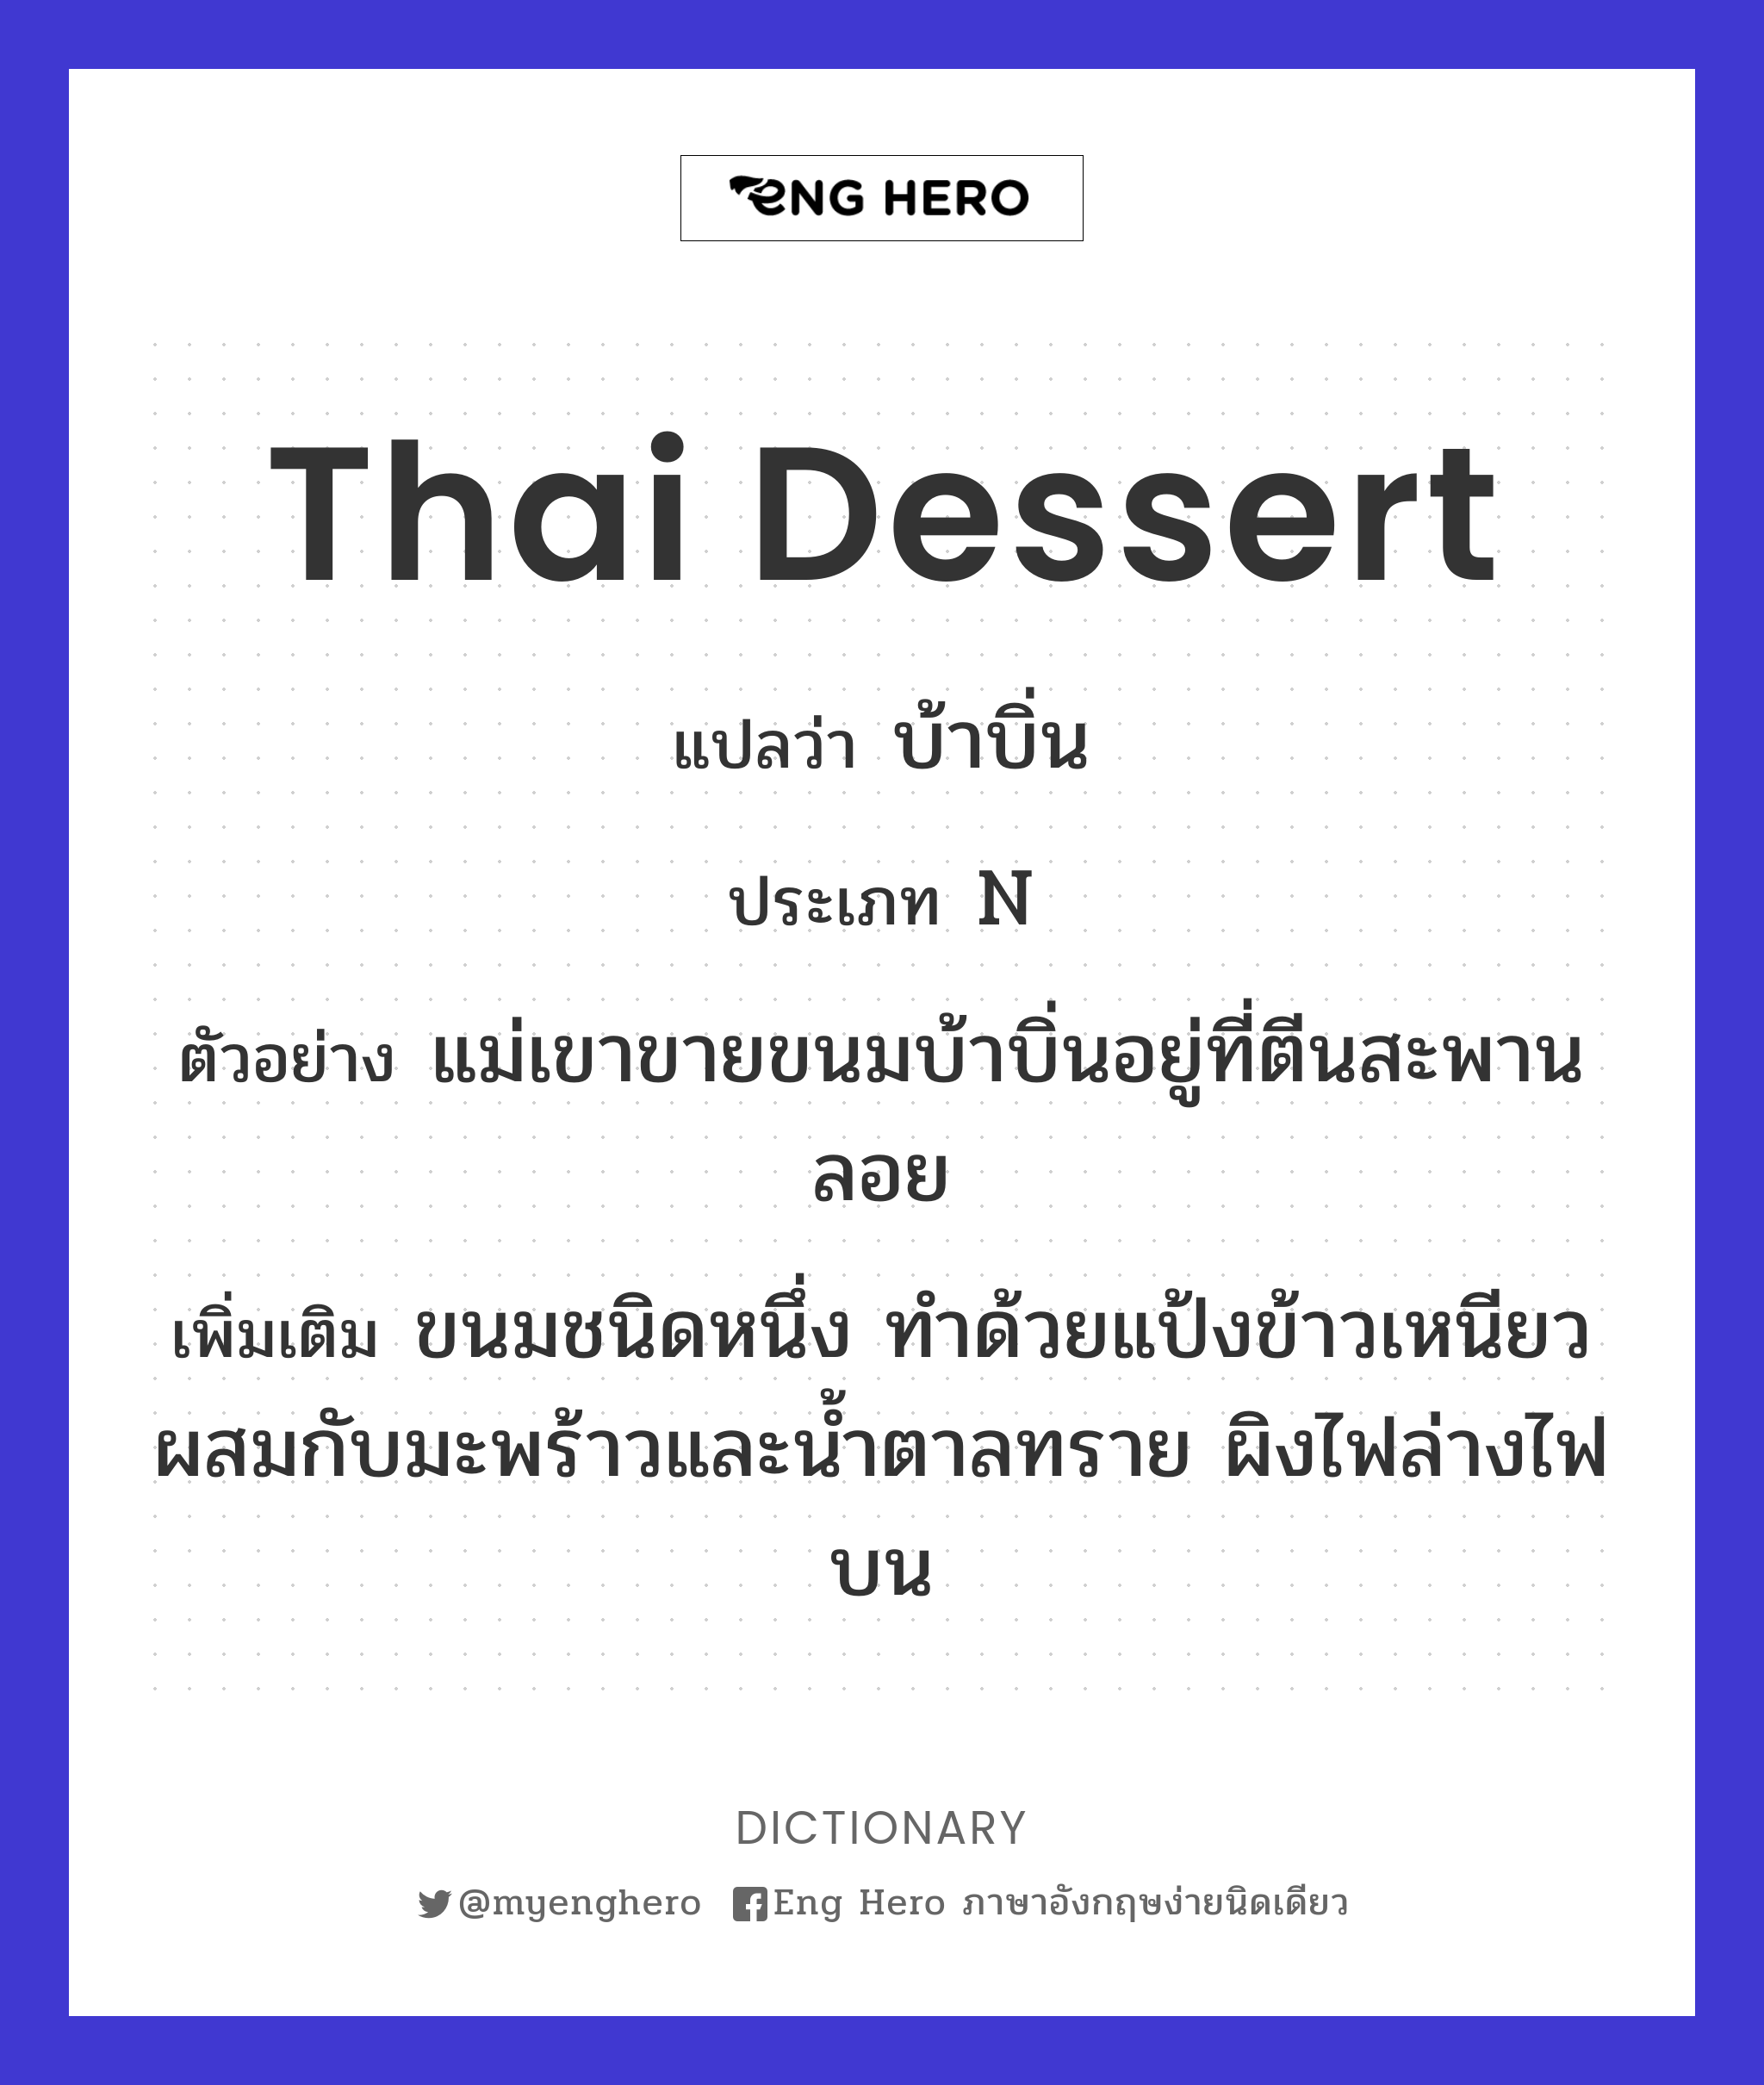 Thai dessert